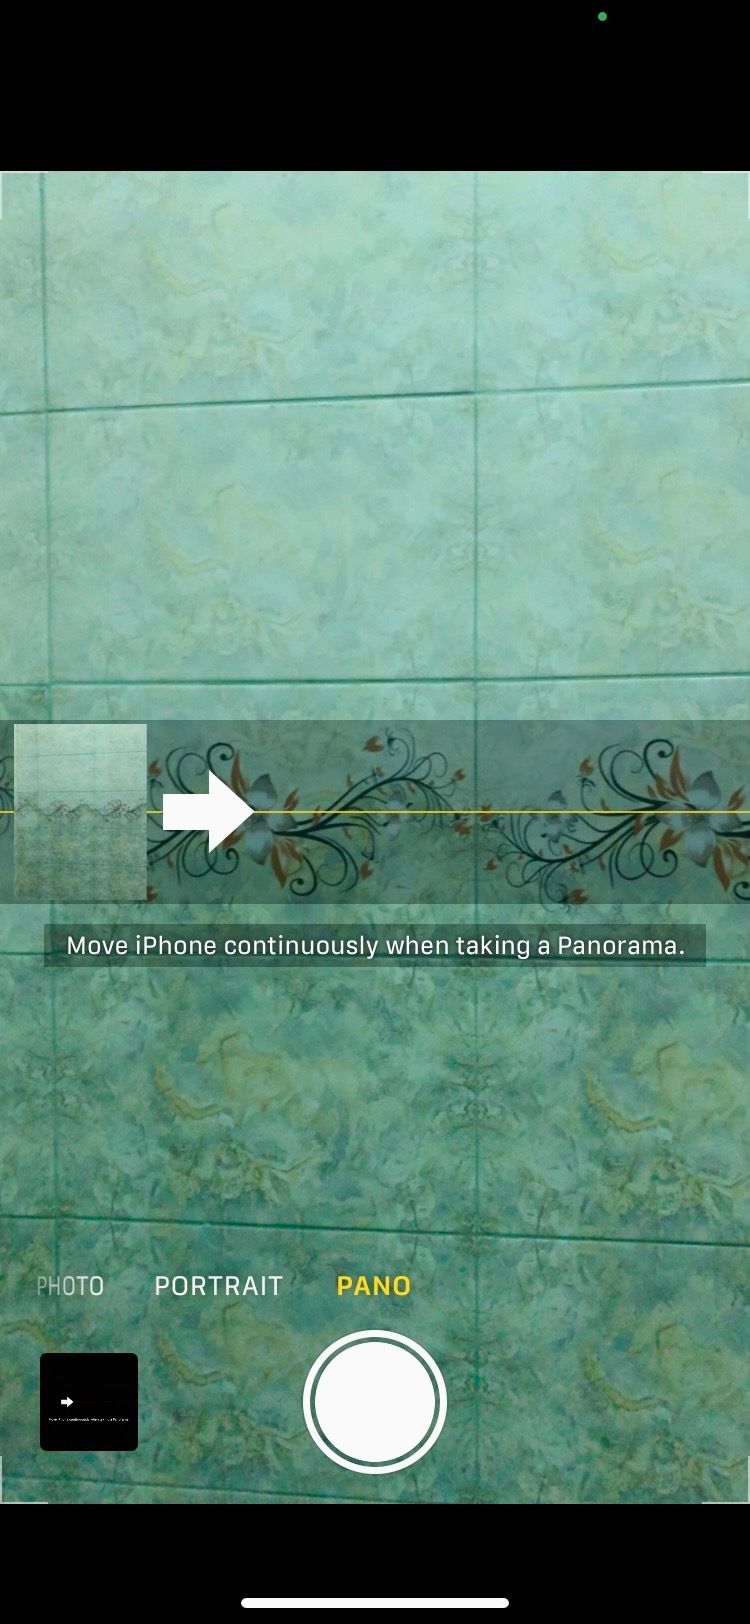 panorama mode in iphone